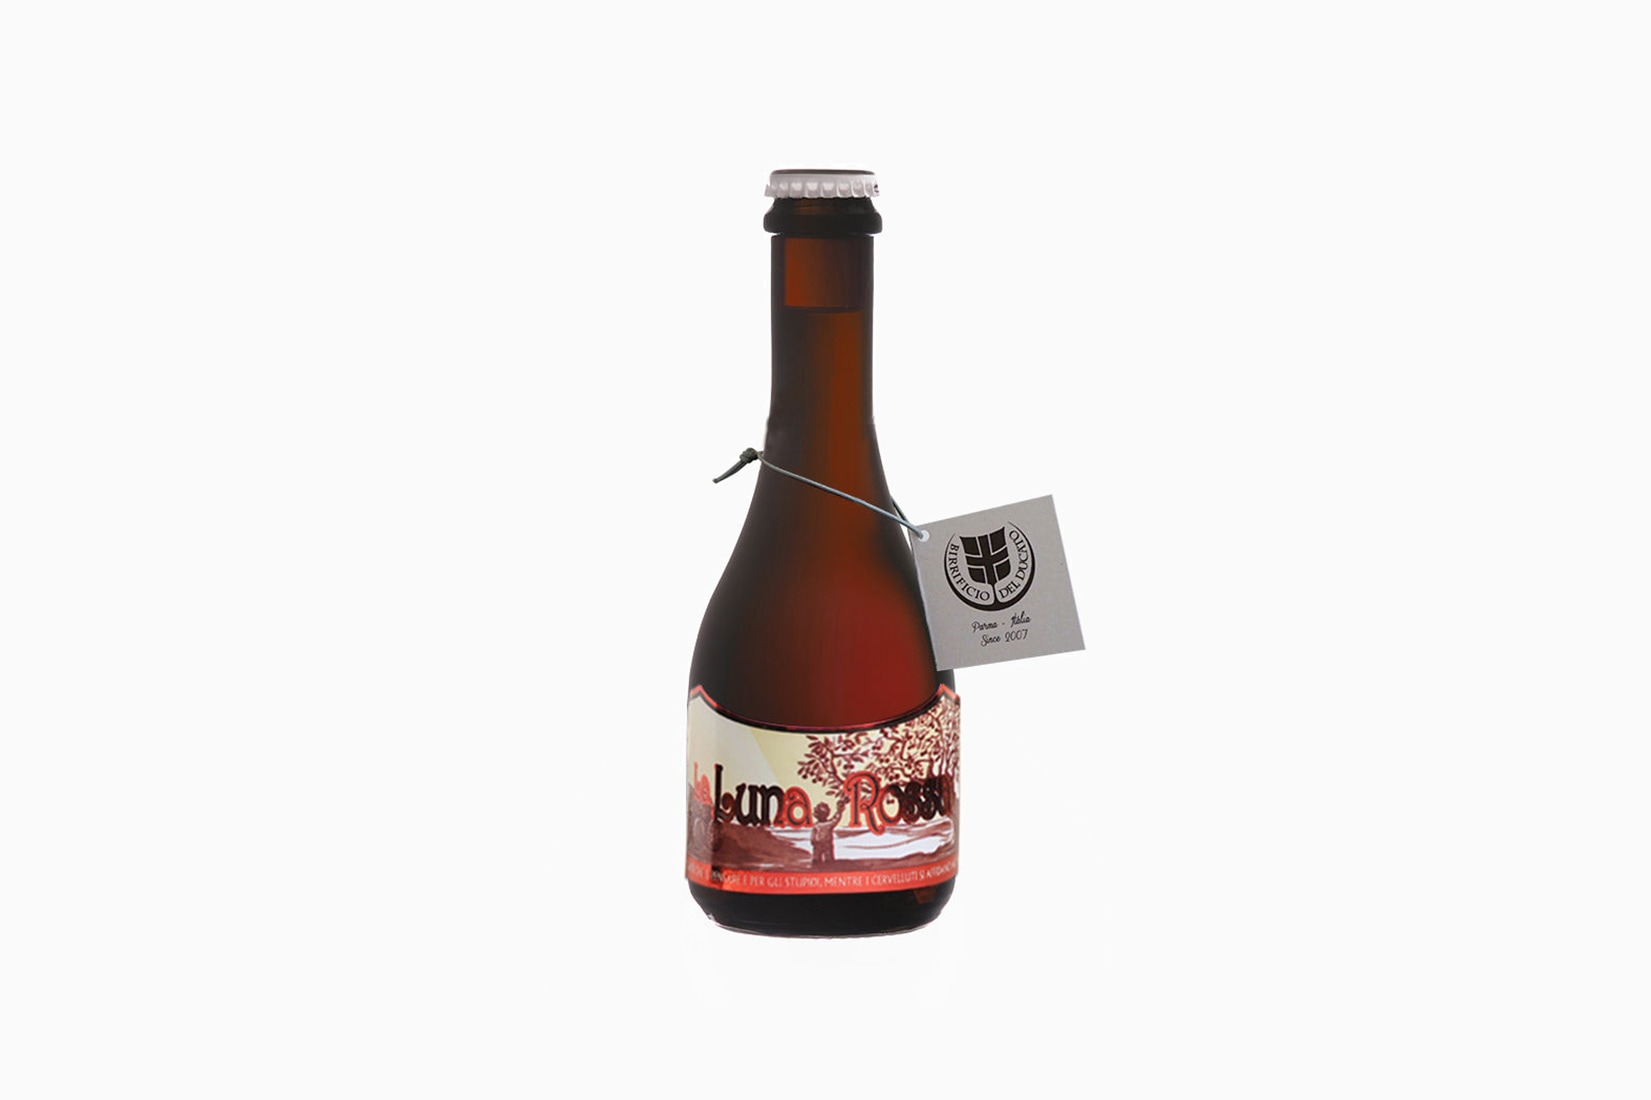 meilleures marques de bière birrificio del ducato la luna rossa - Luxe Digital